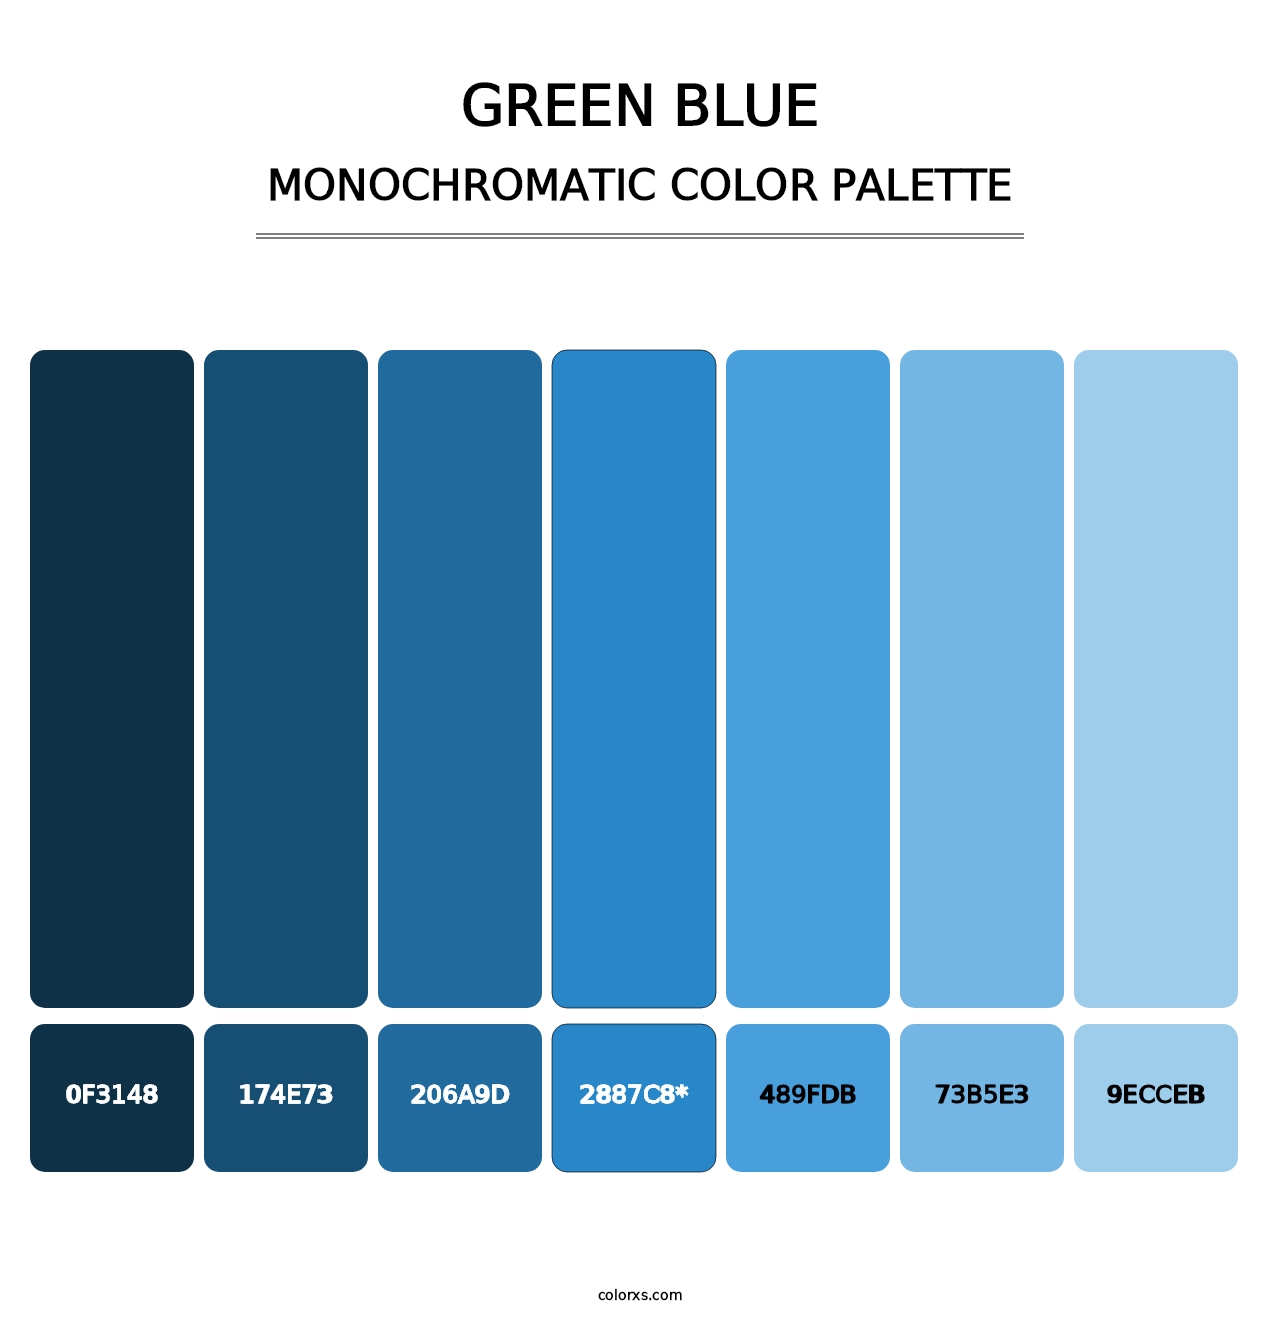 Green Blue - Monochromatic Color Palette